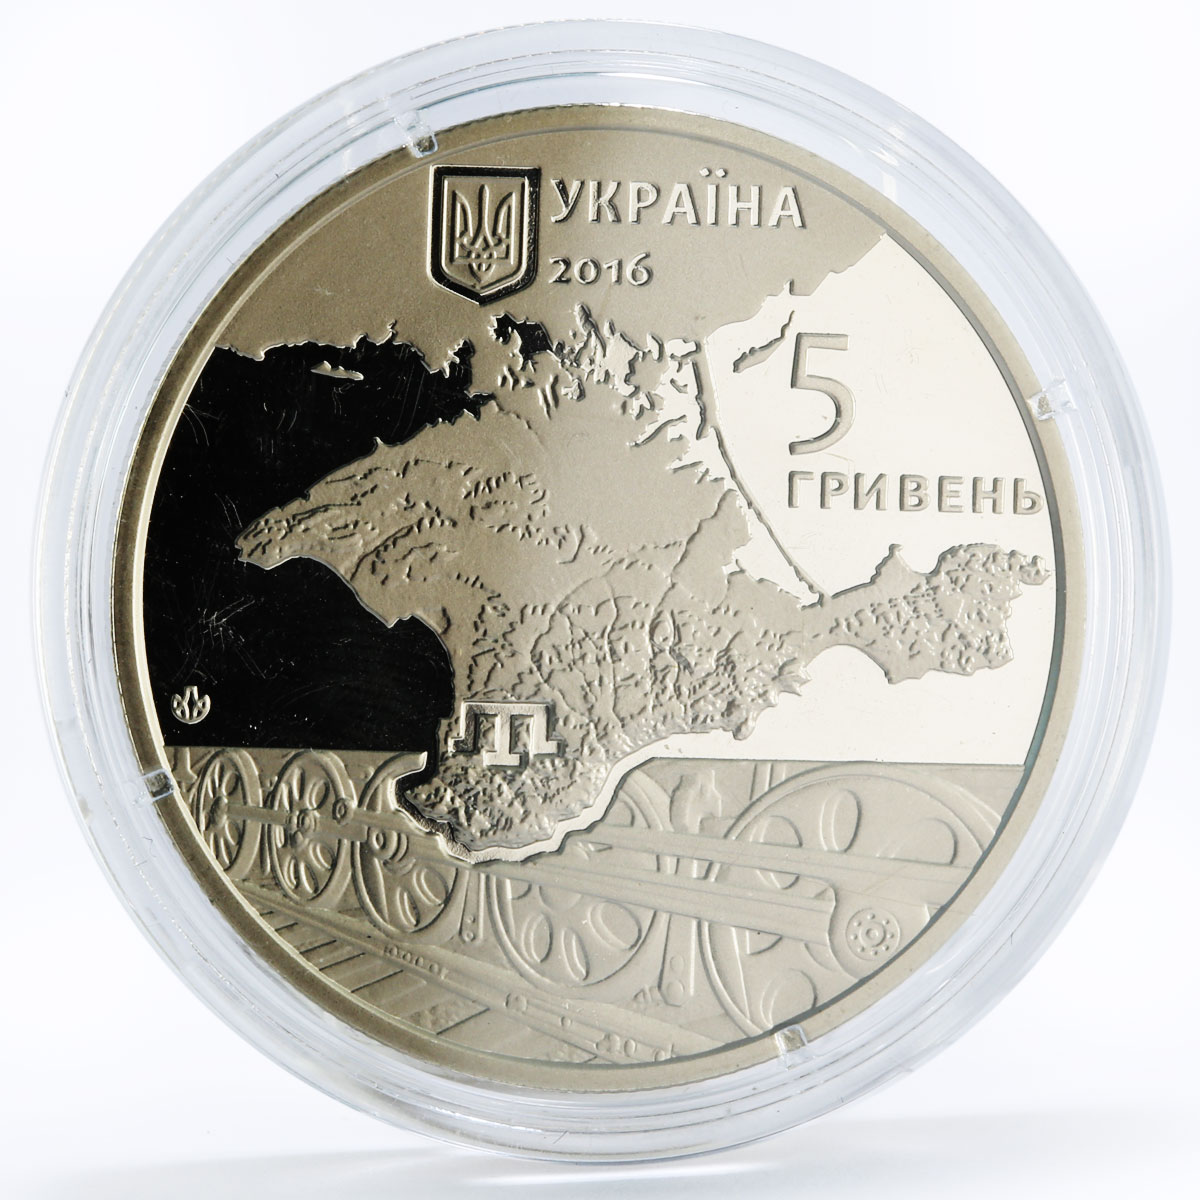 Ukraine 5 hryvnias Genocide of Crimean Tatars nickel coin 2016